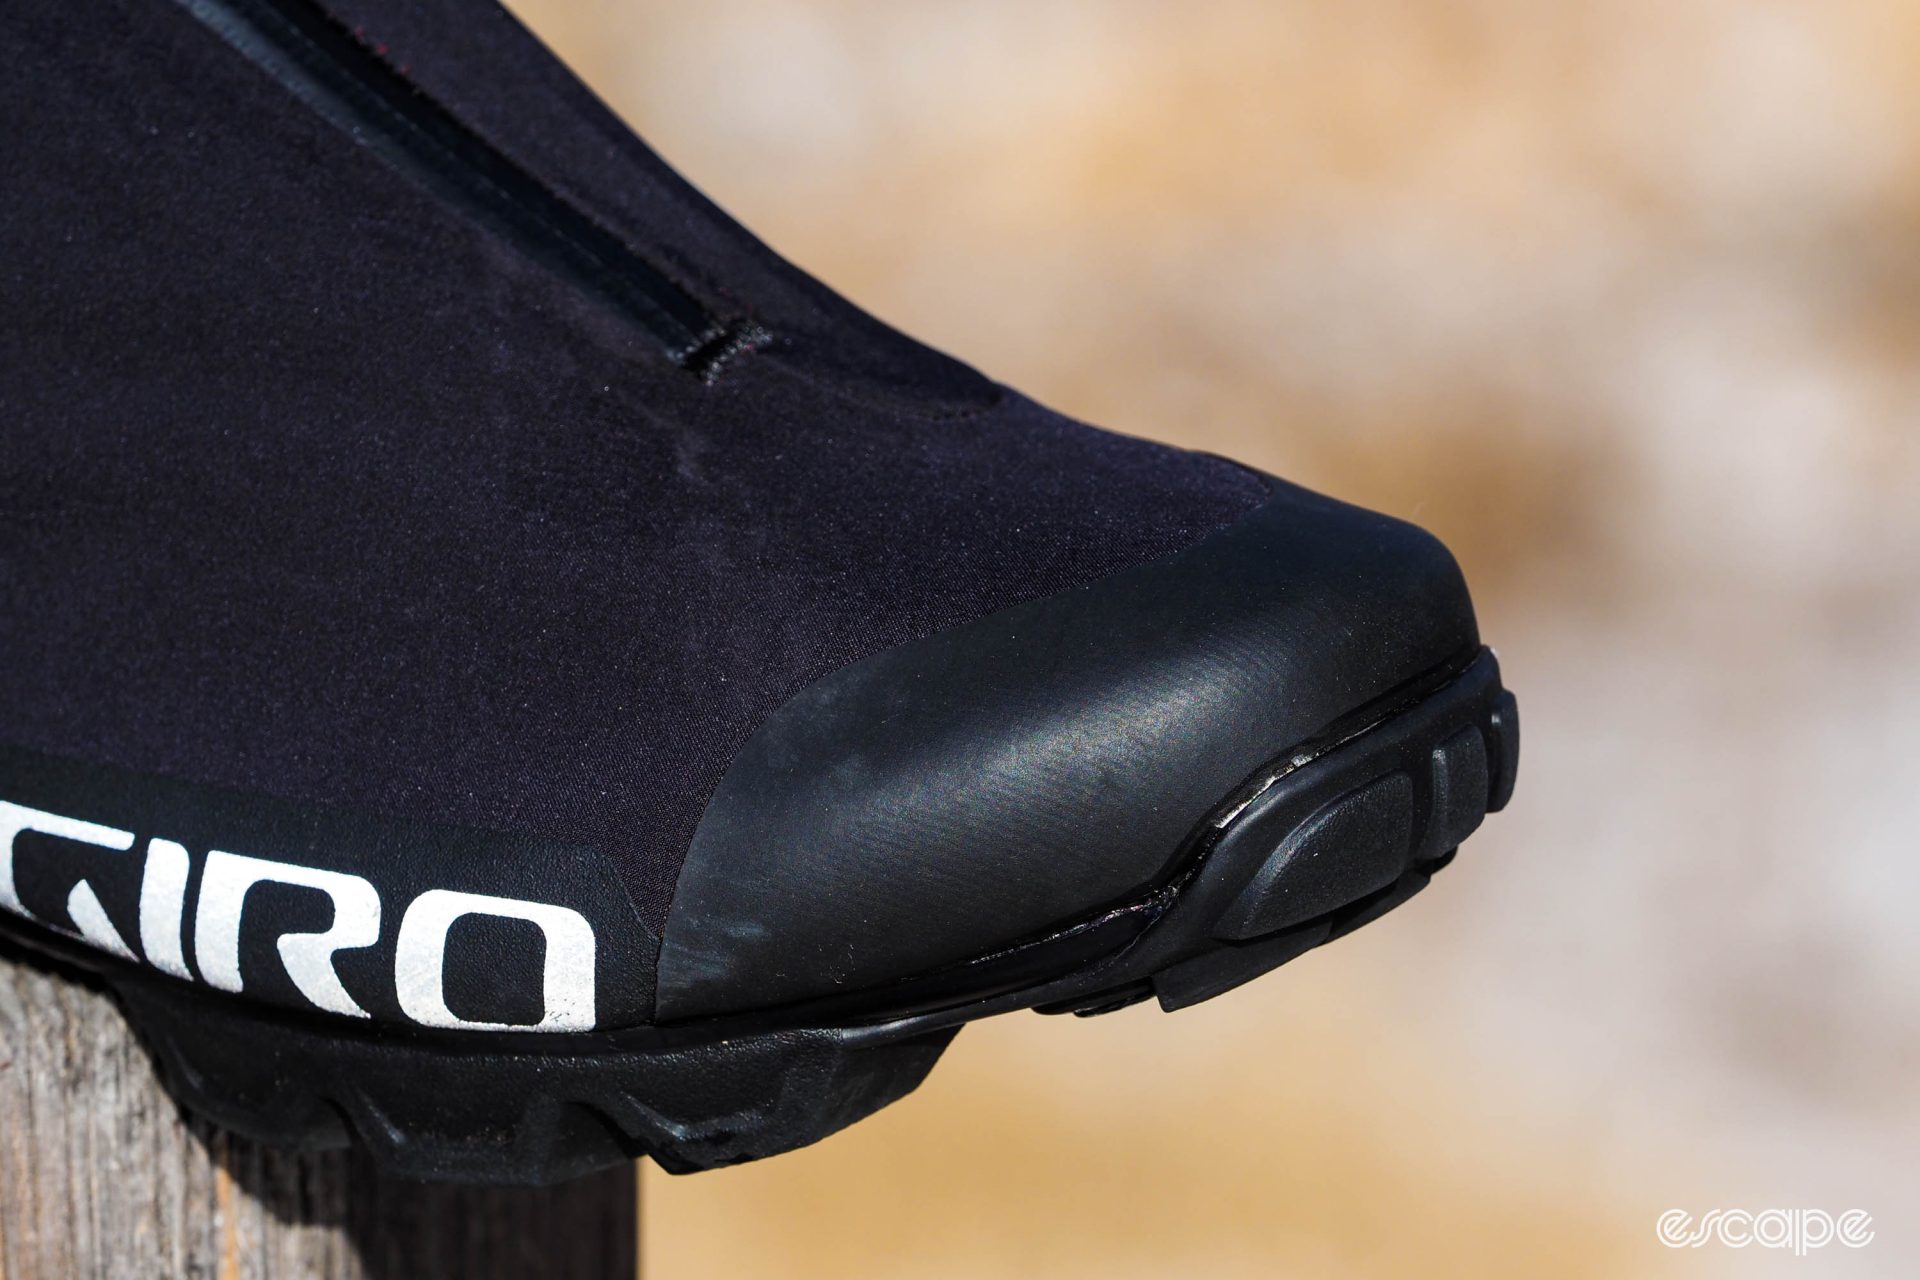 Giro Blaze winter cycling shoes reinforced toe area